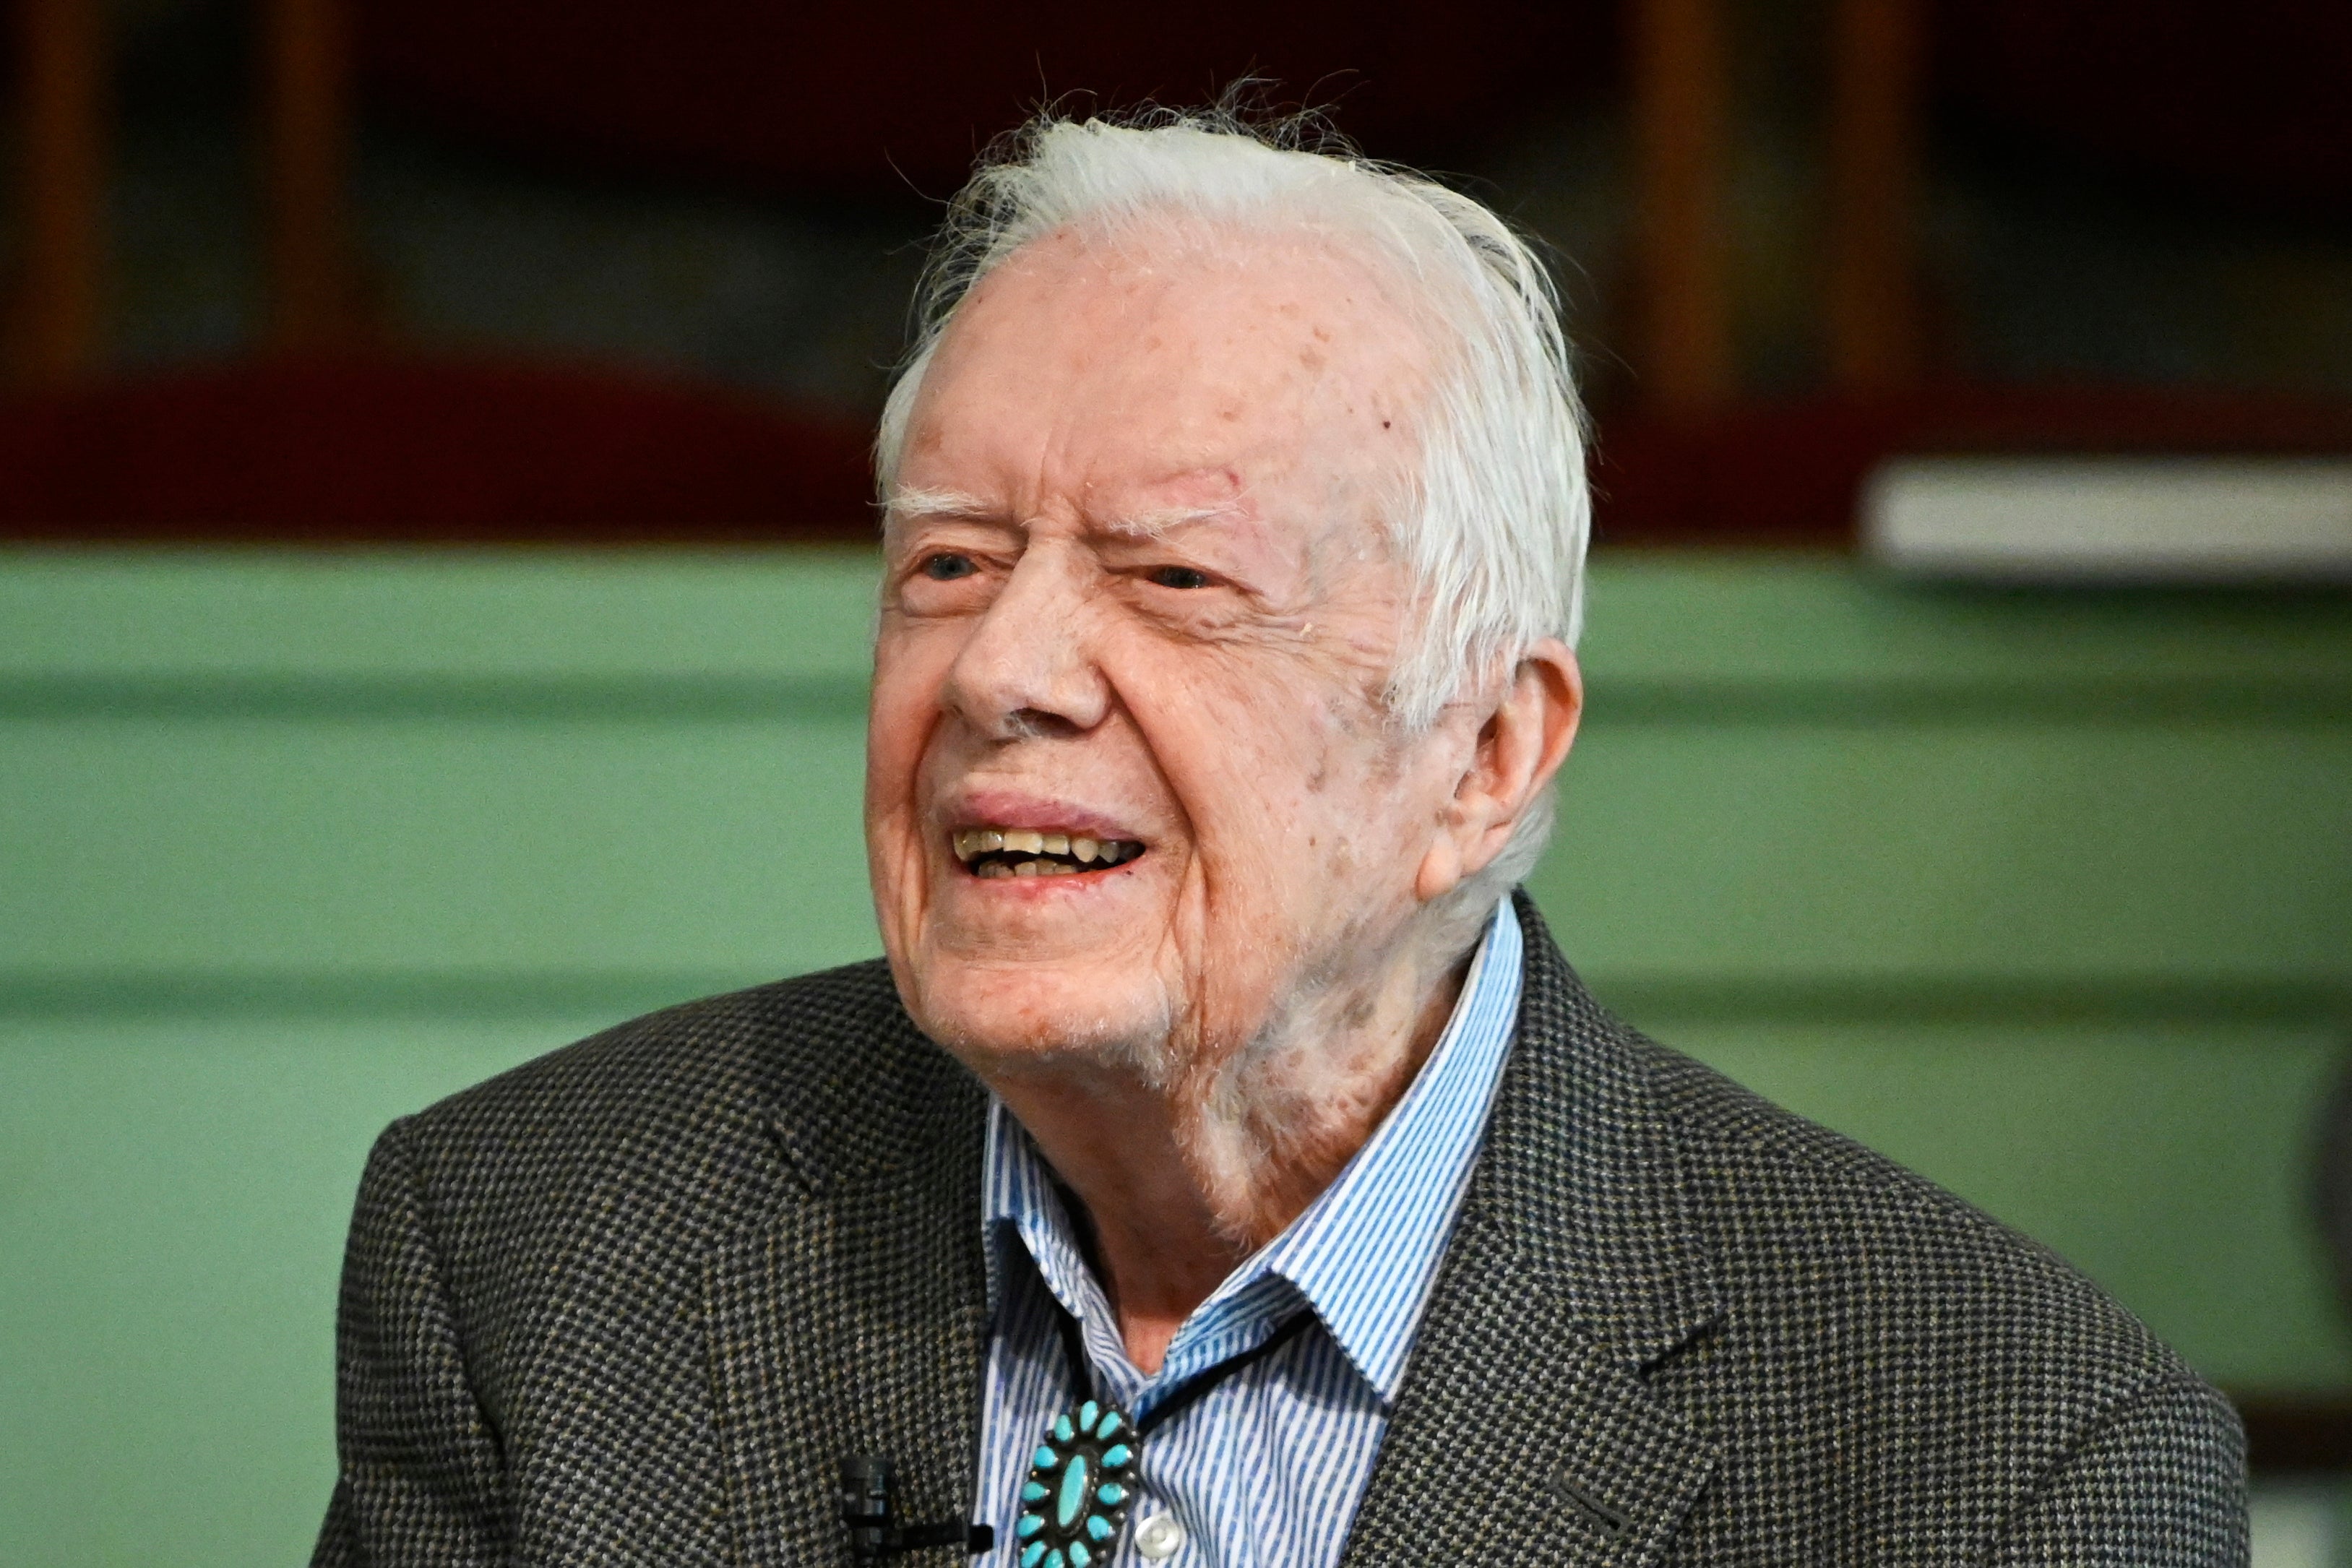 Former President Jimmy Carter celebrates 96th birthday Joe Biden office